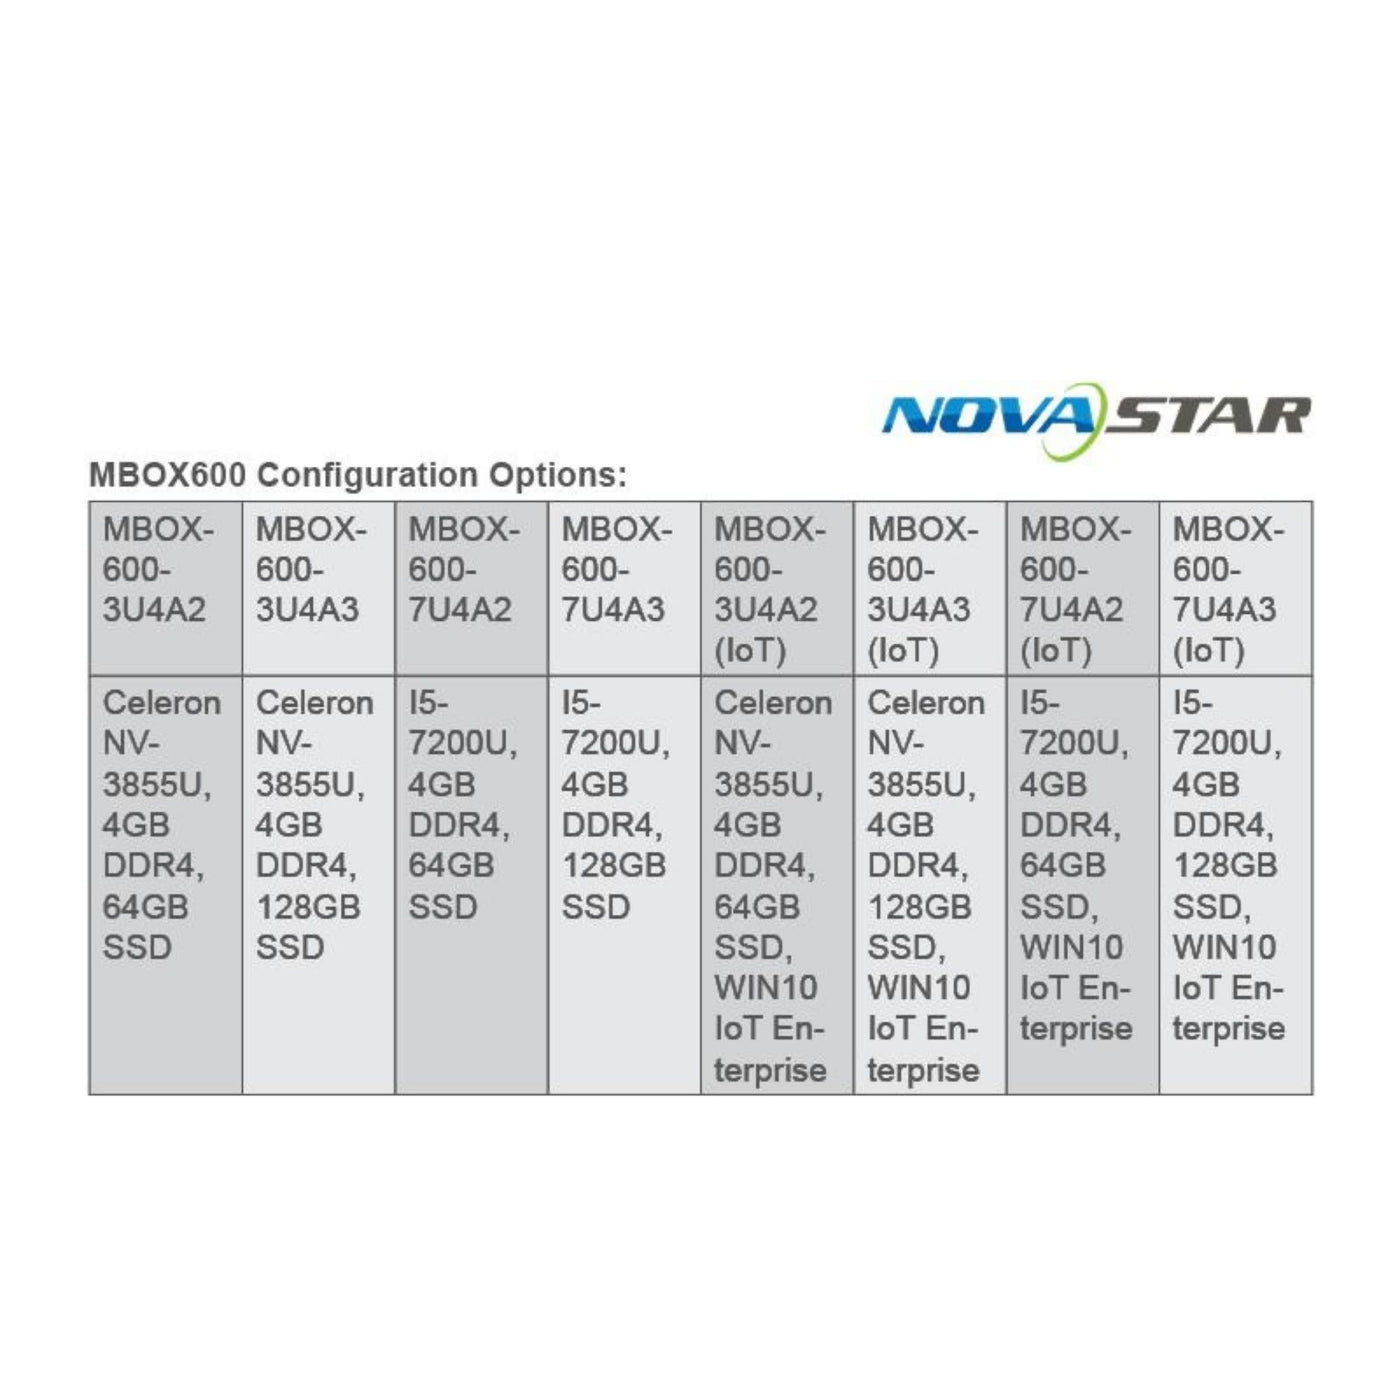 NovaStar 124228 MBOX-600-7U4A3 (IoT) MBOX Series Multimedia Player